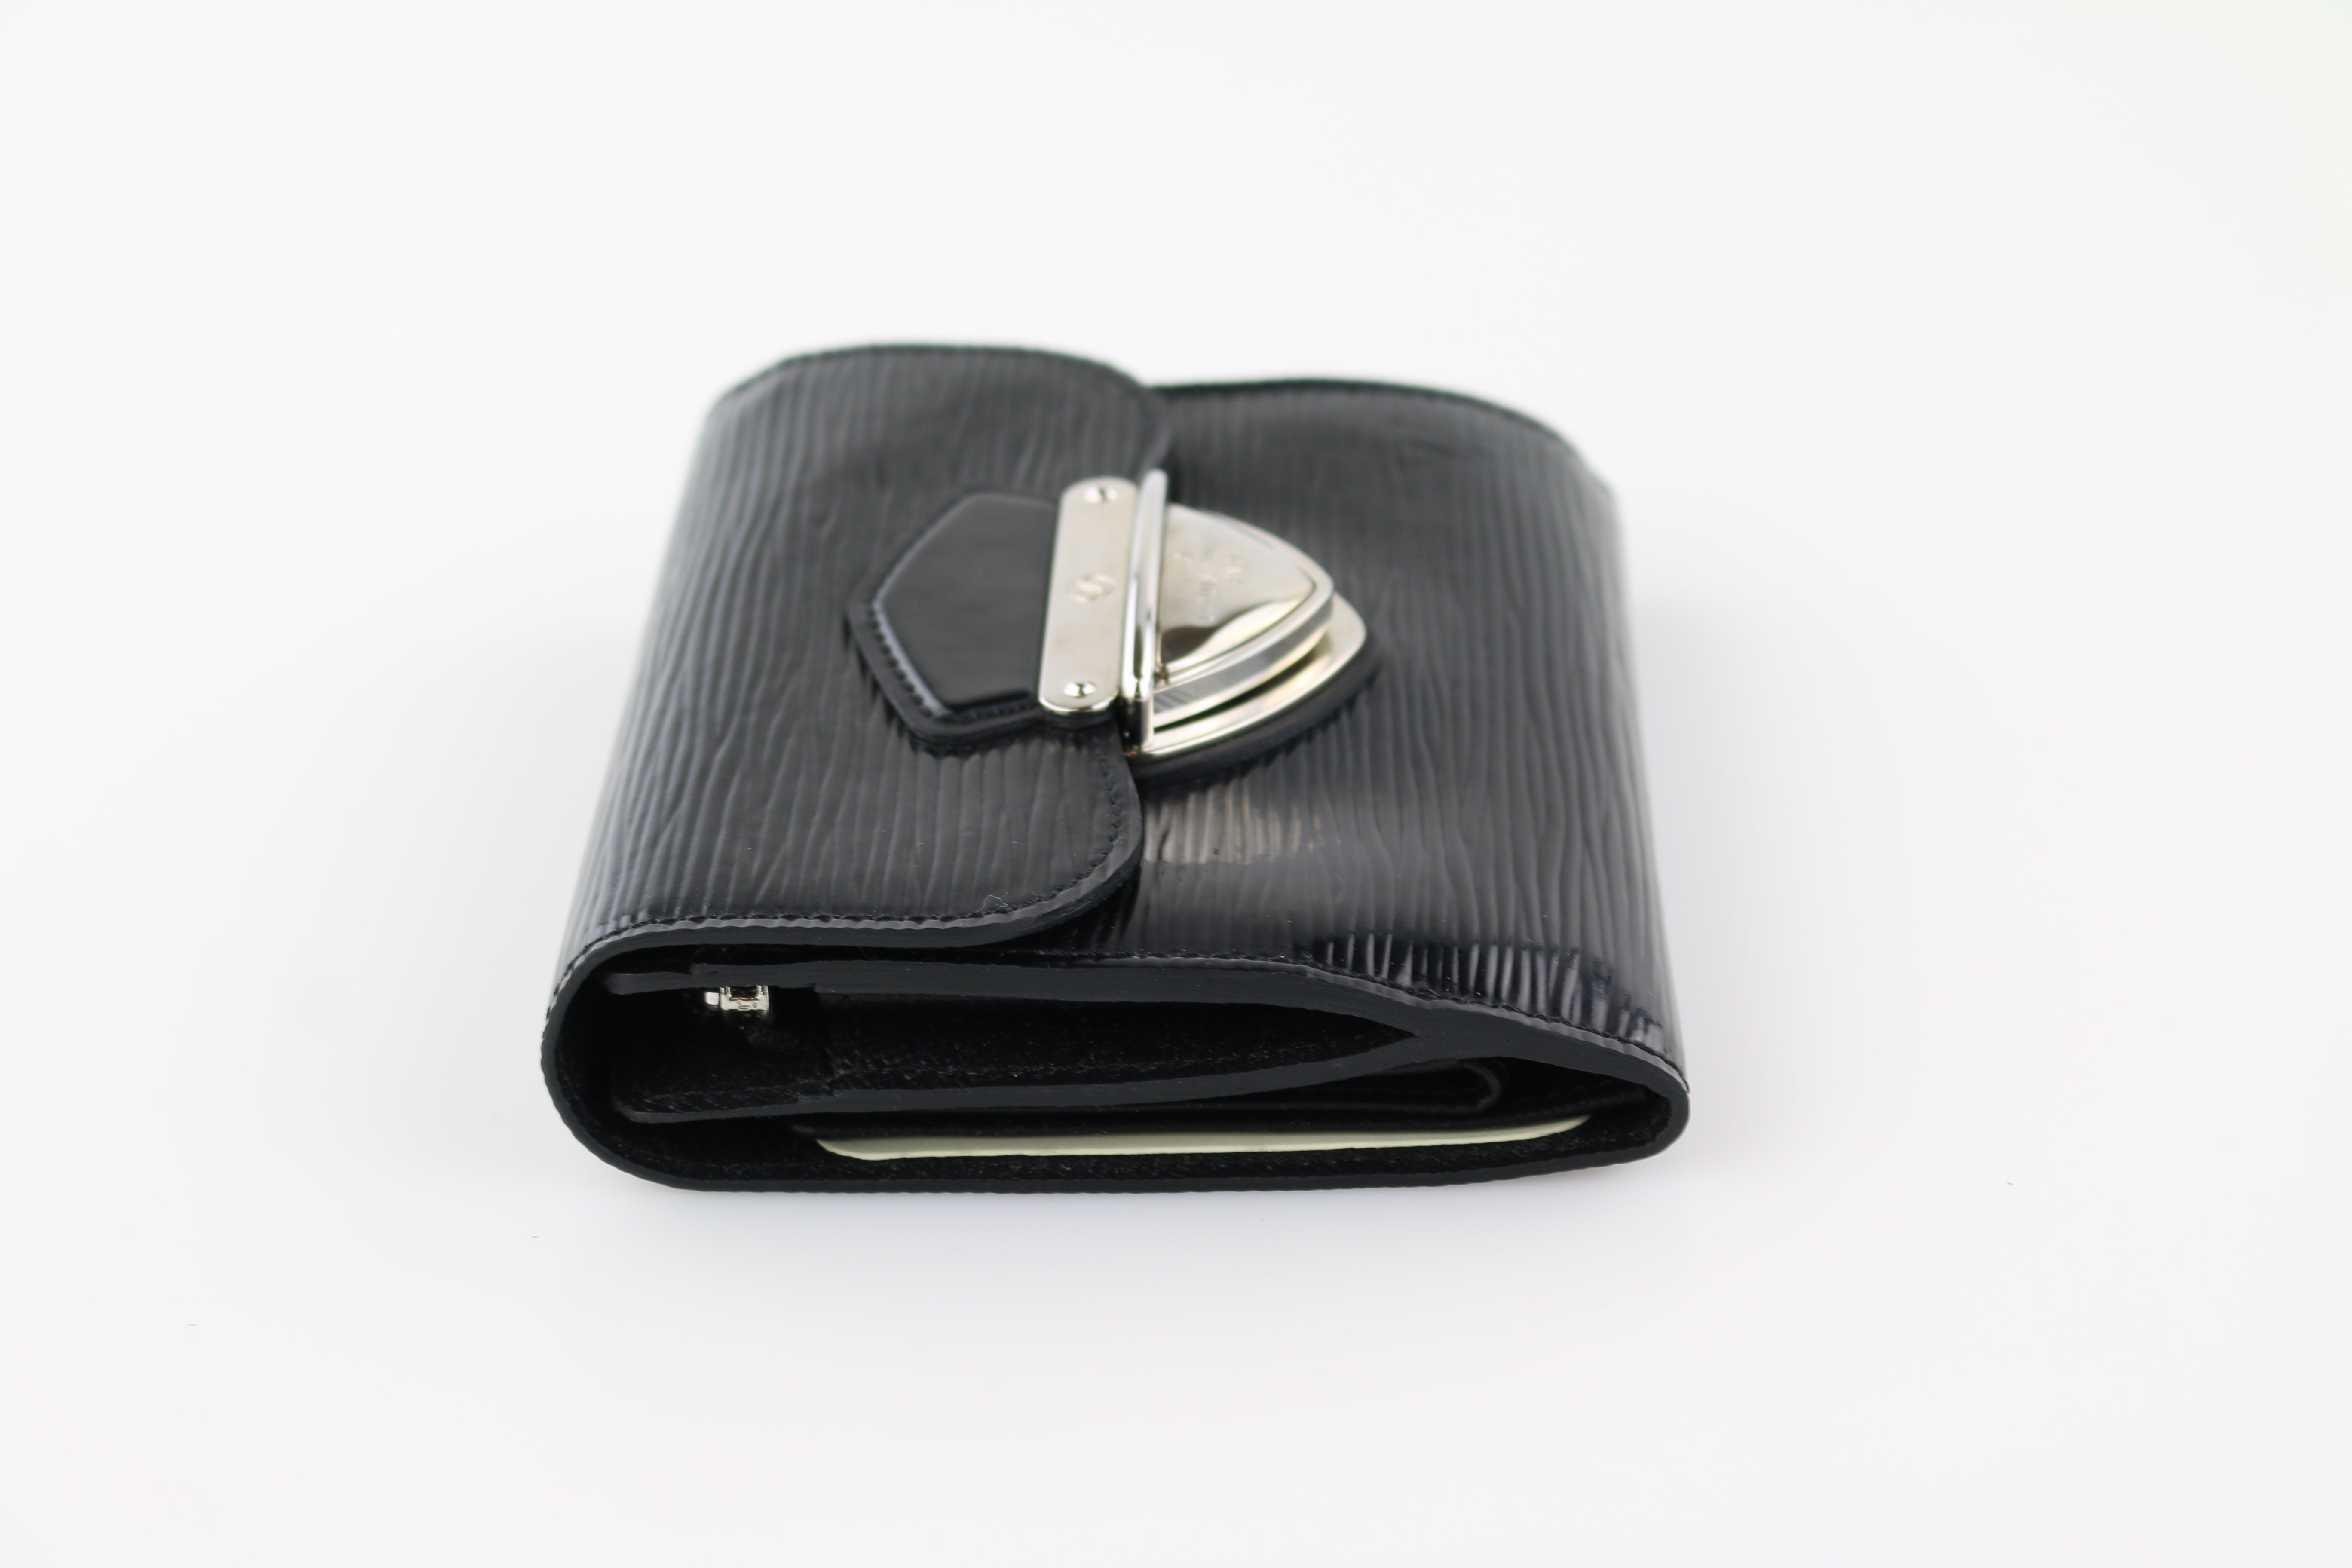 Louis Vuitton Louis Vuitton Joey Black Electric Epi Leather Wallet